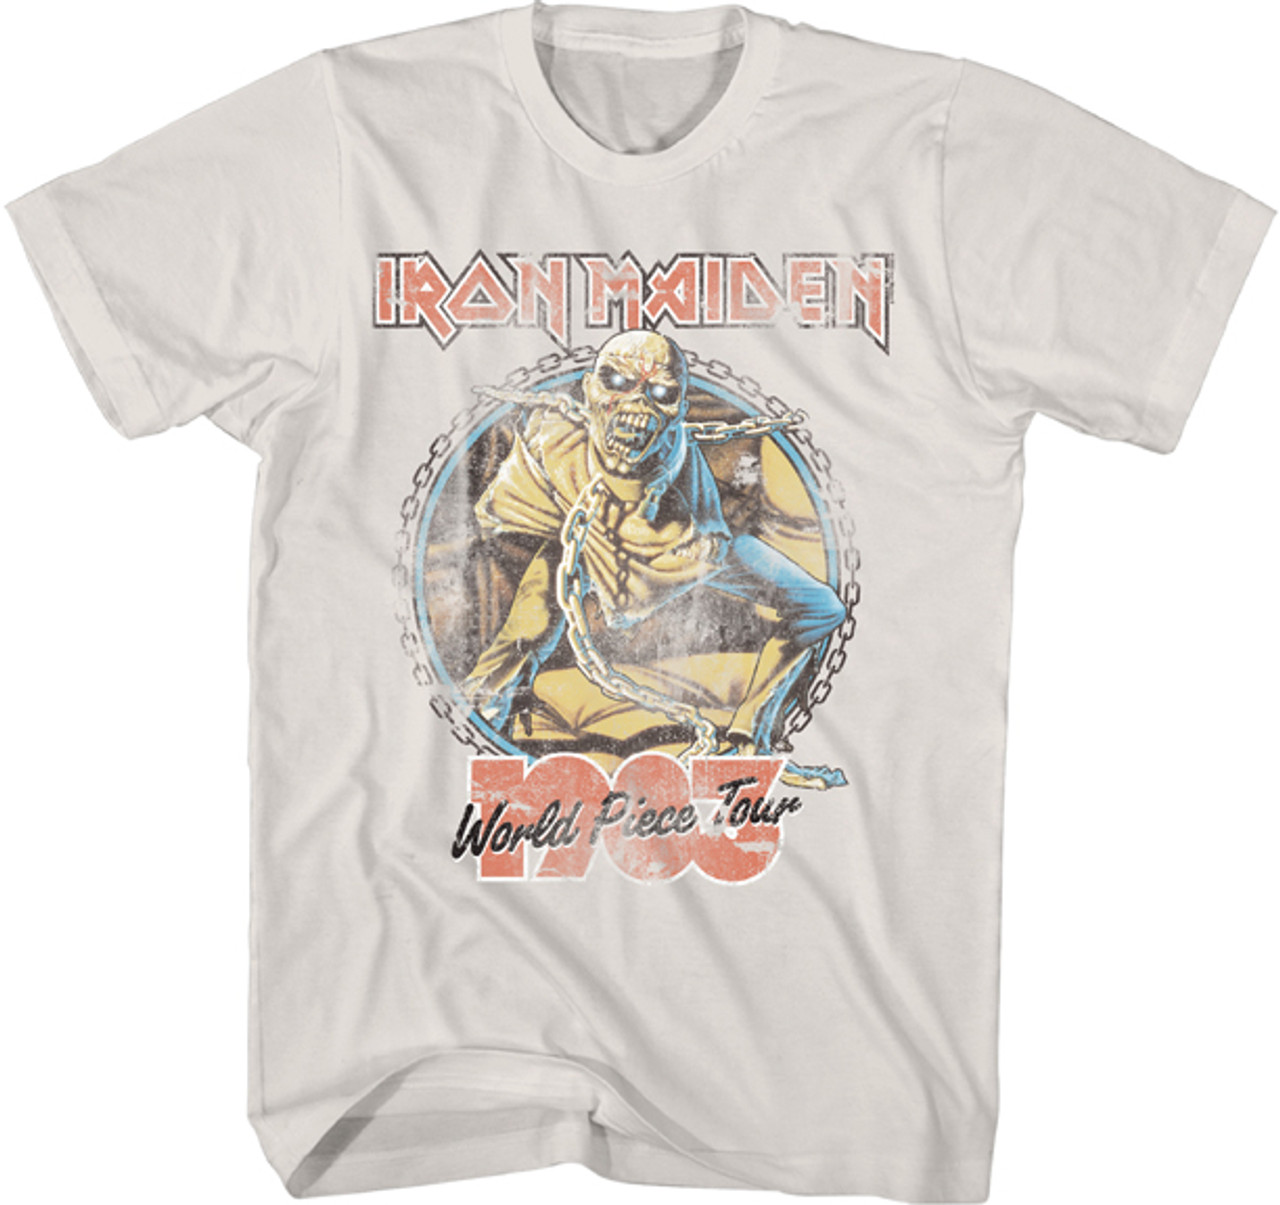 Buy Iron Maiden World Piece Tour T-Shirt | Old School Heavy Metal